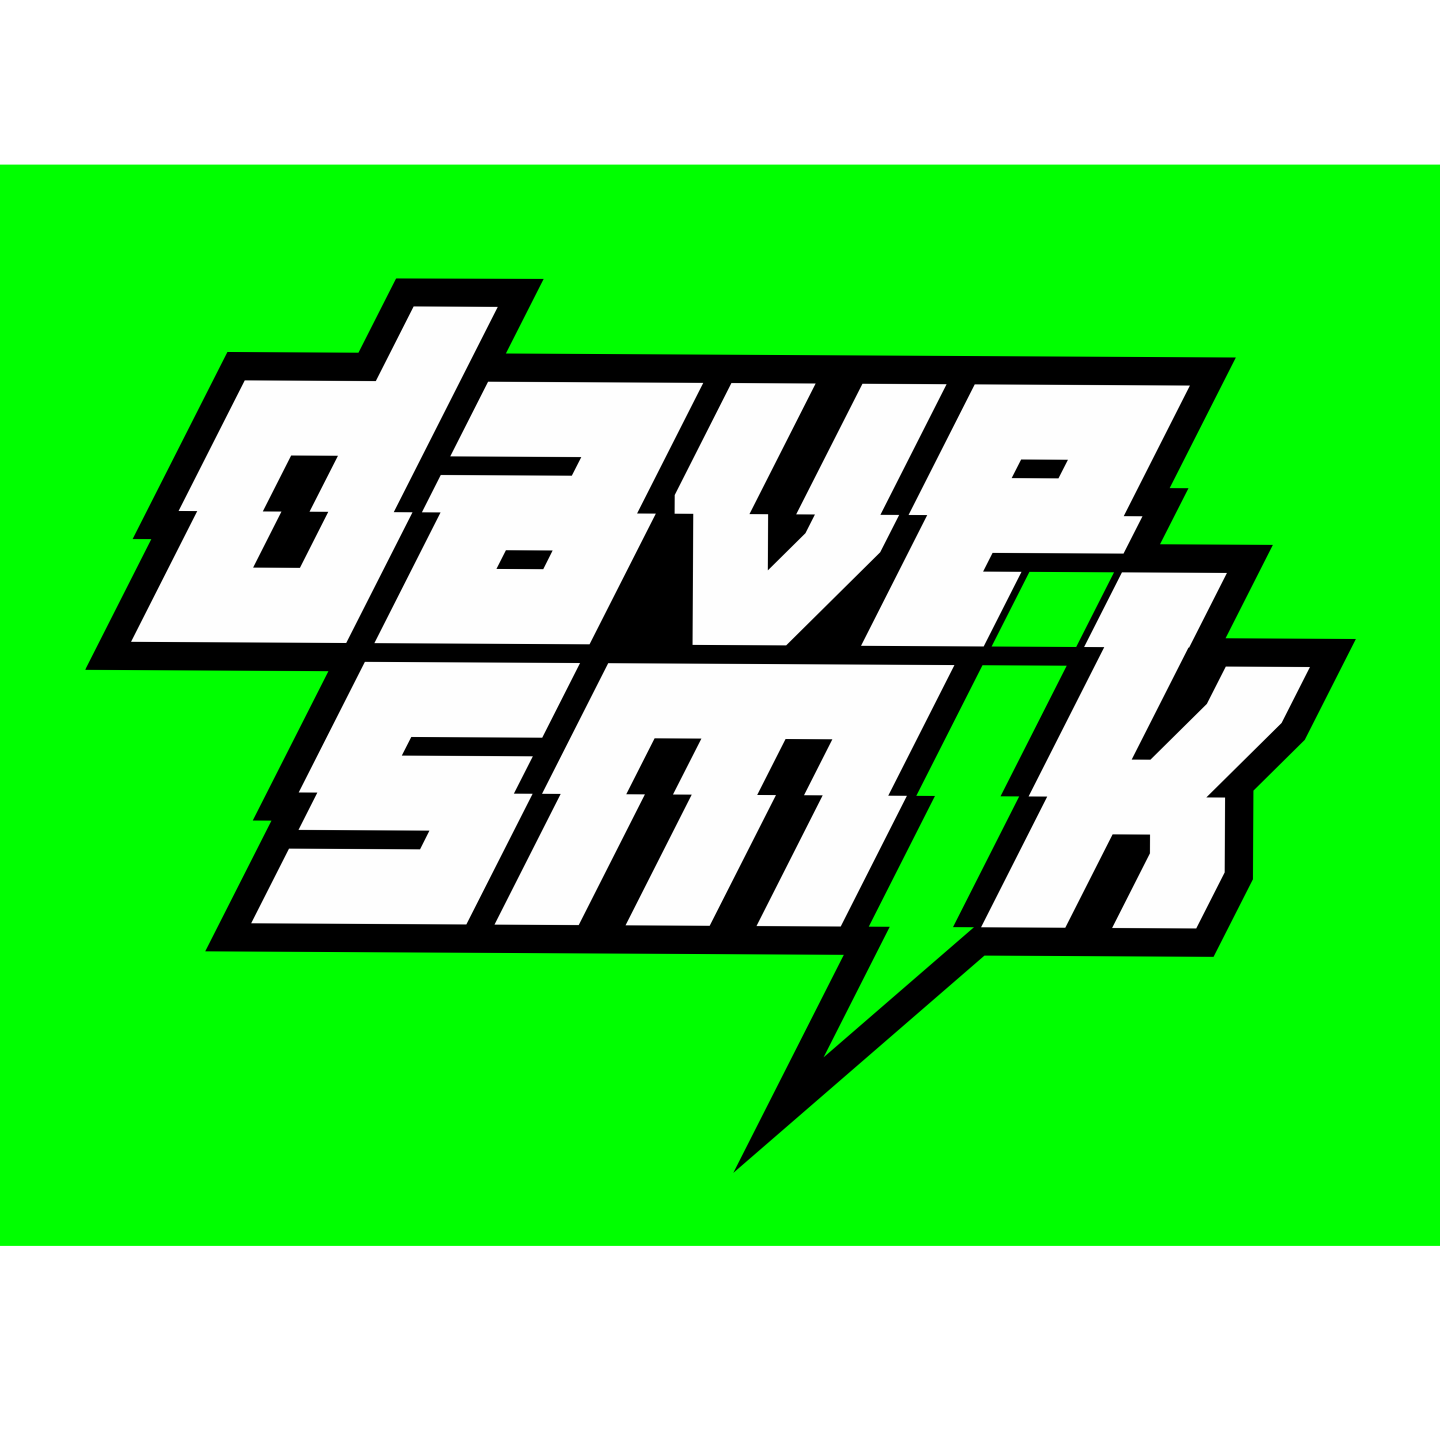 Dave Smik